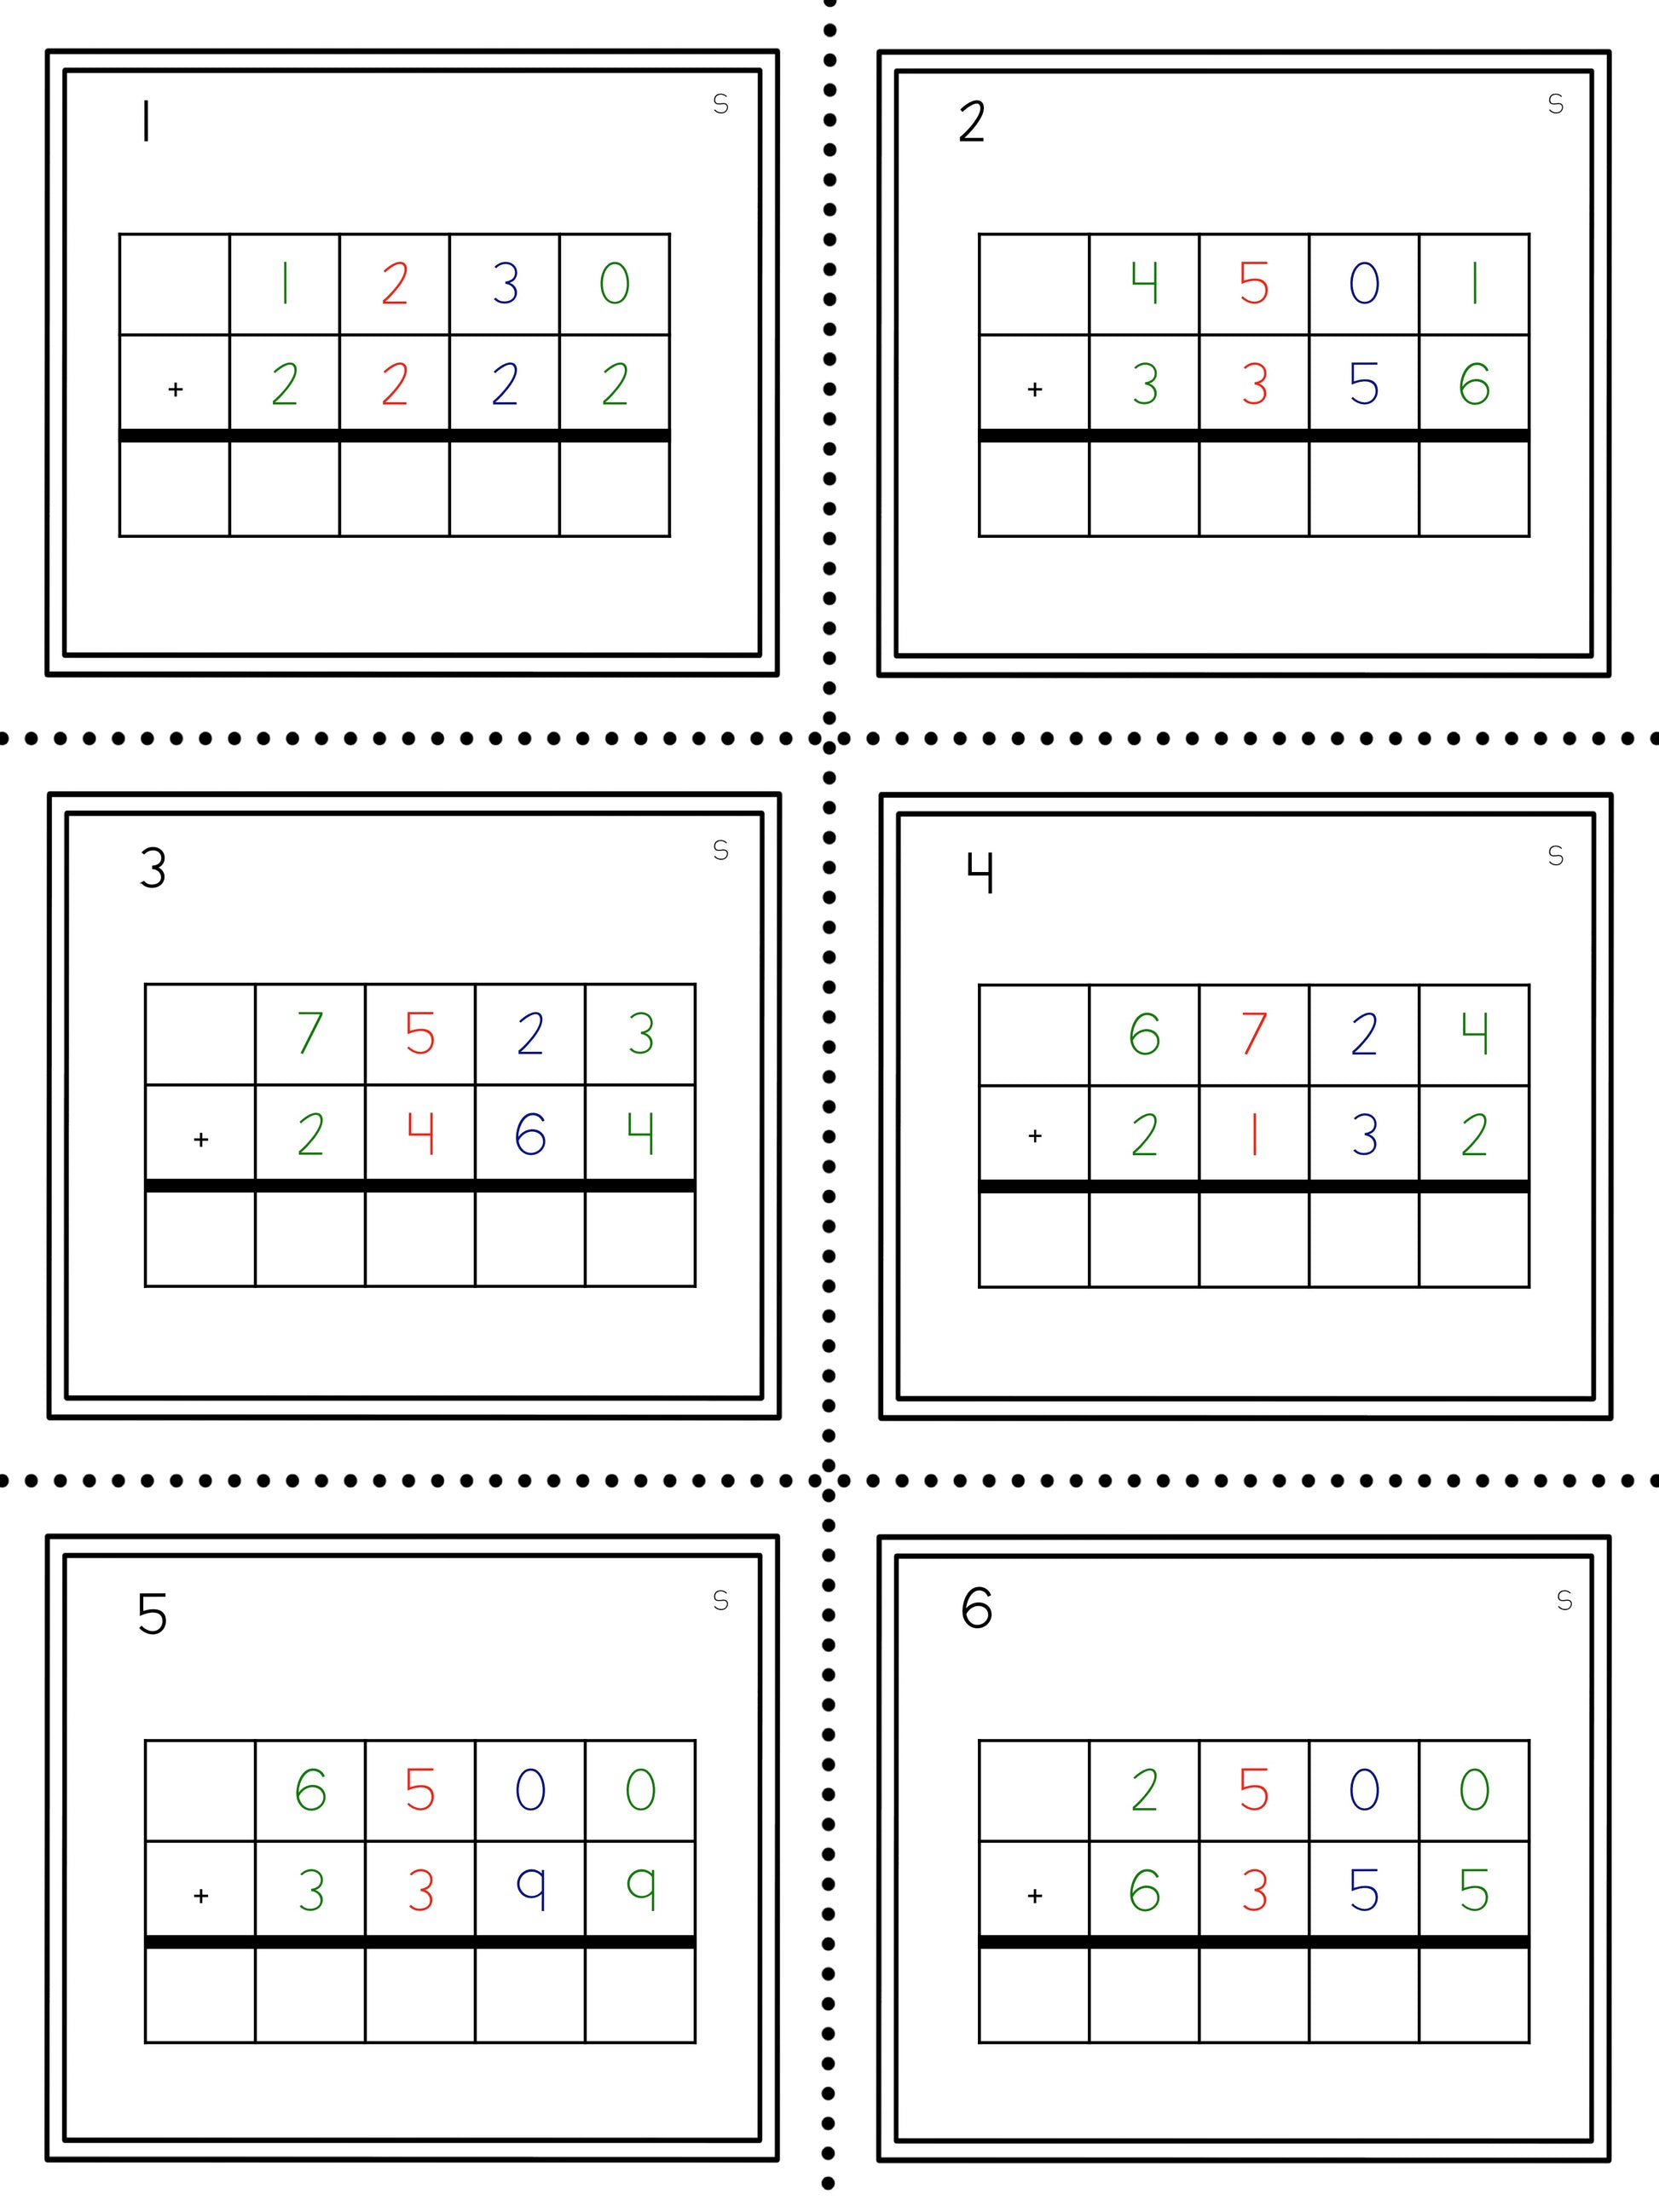 Four digit equations (Montessori) - montessorikiwi